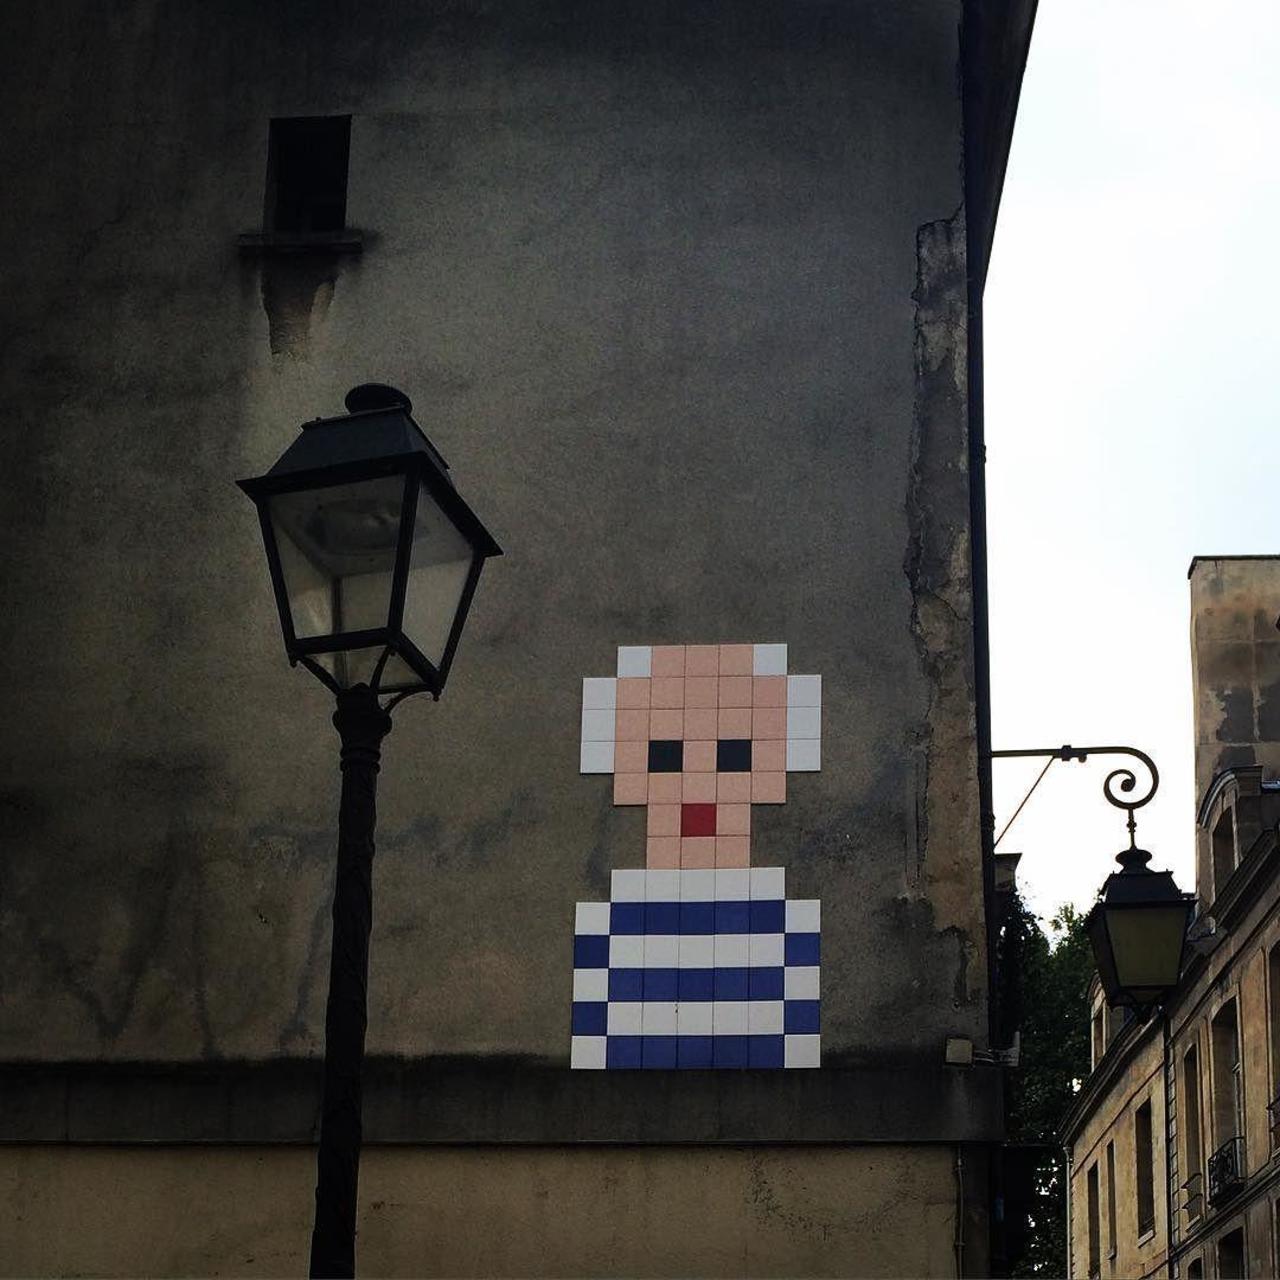 #Paris #graffiti photo by @julienvermeulen http://ift.tt/1Qpqa7T #StreetArt http://t.co/wkxSDwQ16p